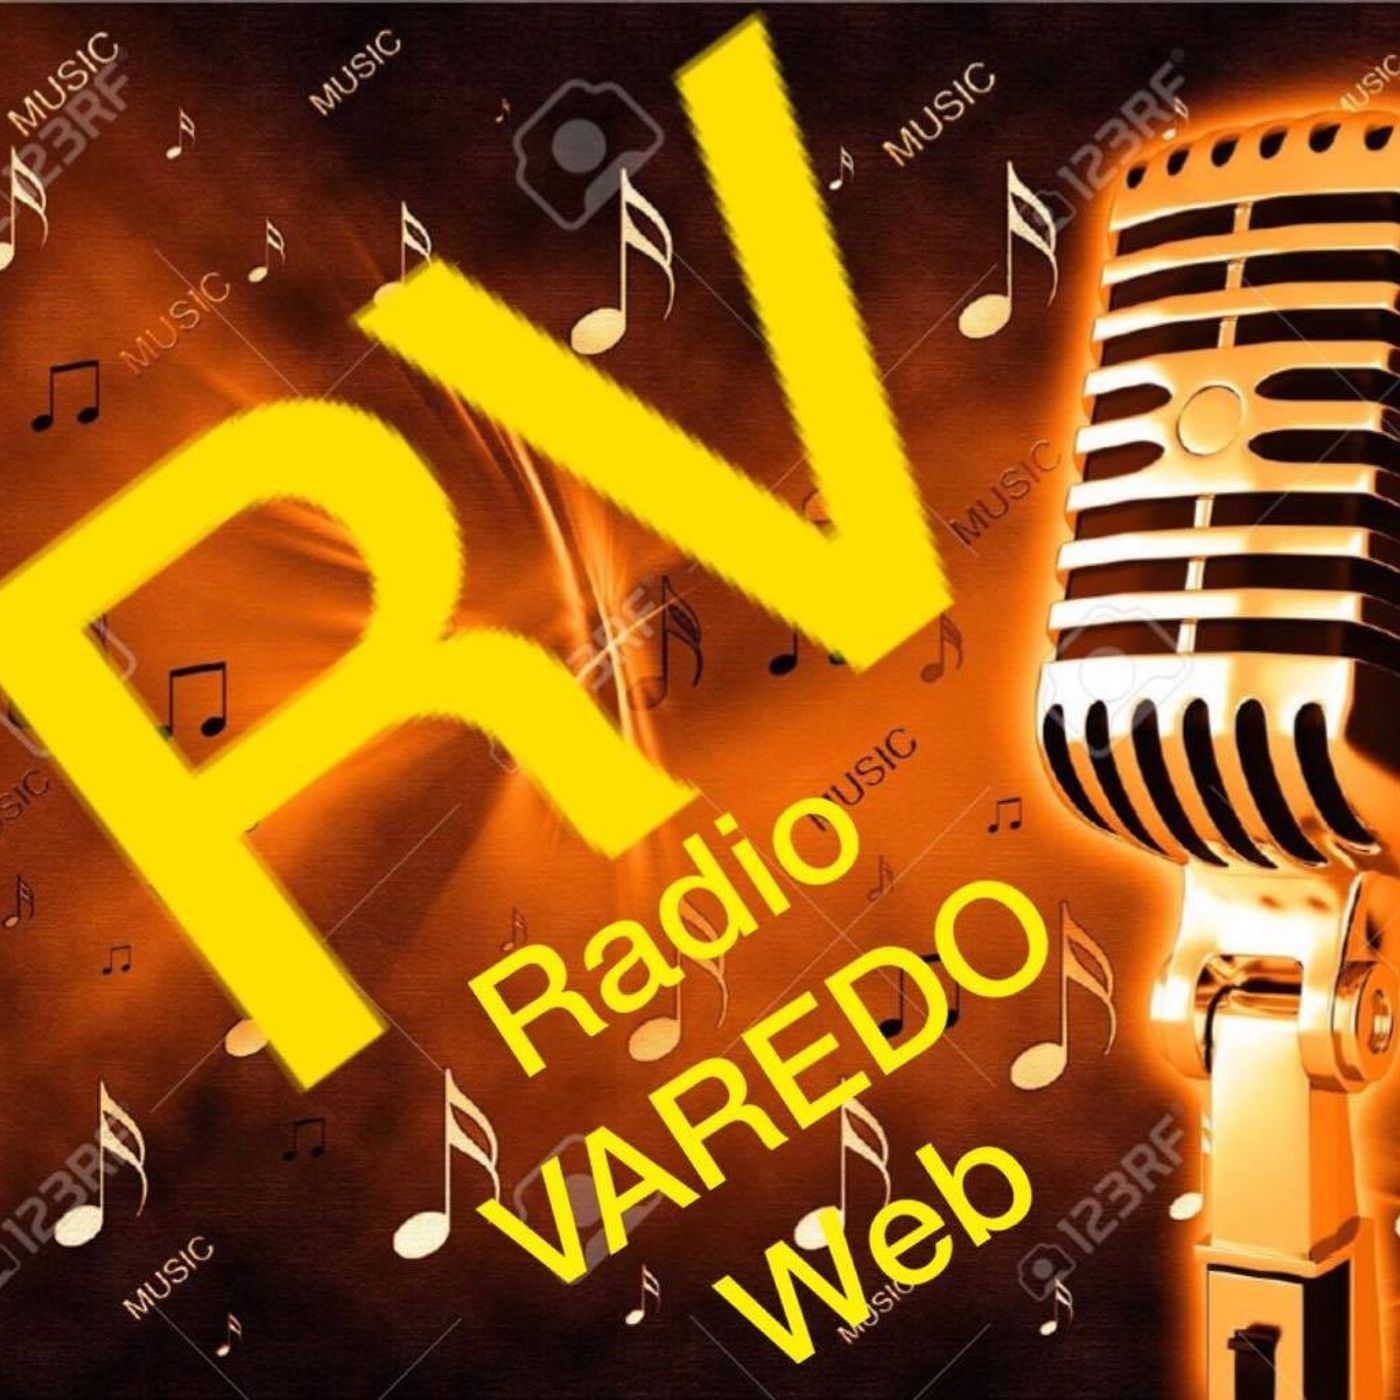 Audiovelox  www.radiovaredo.it